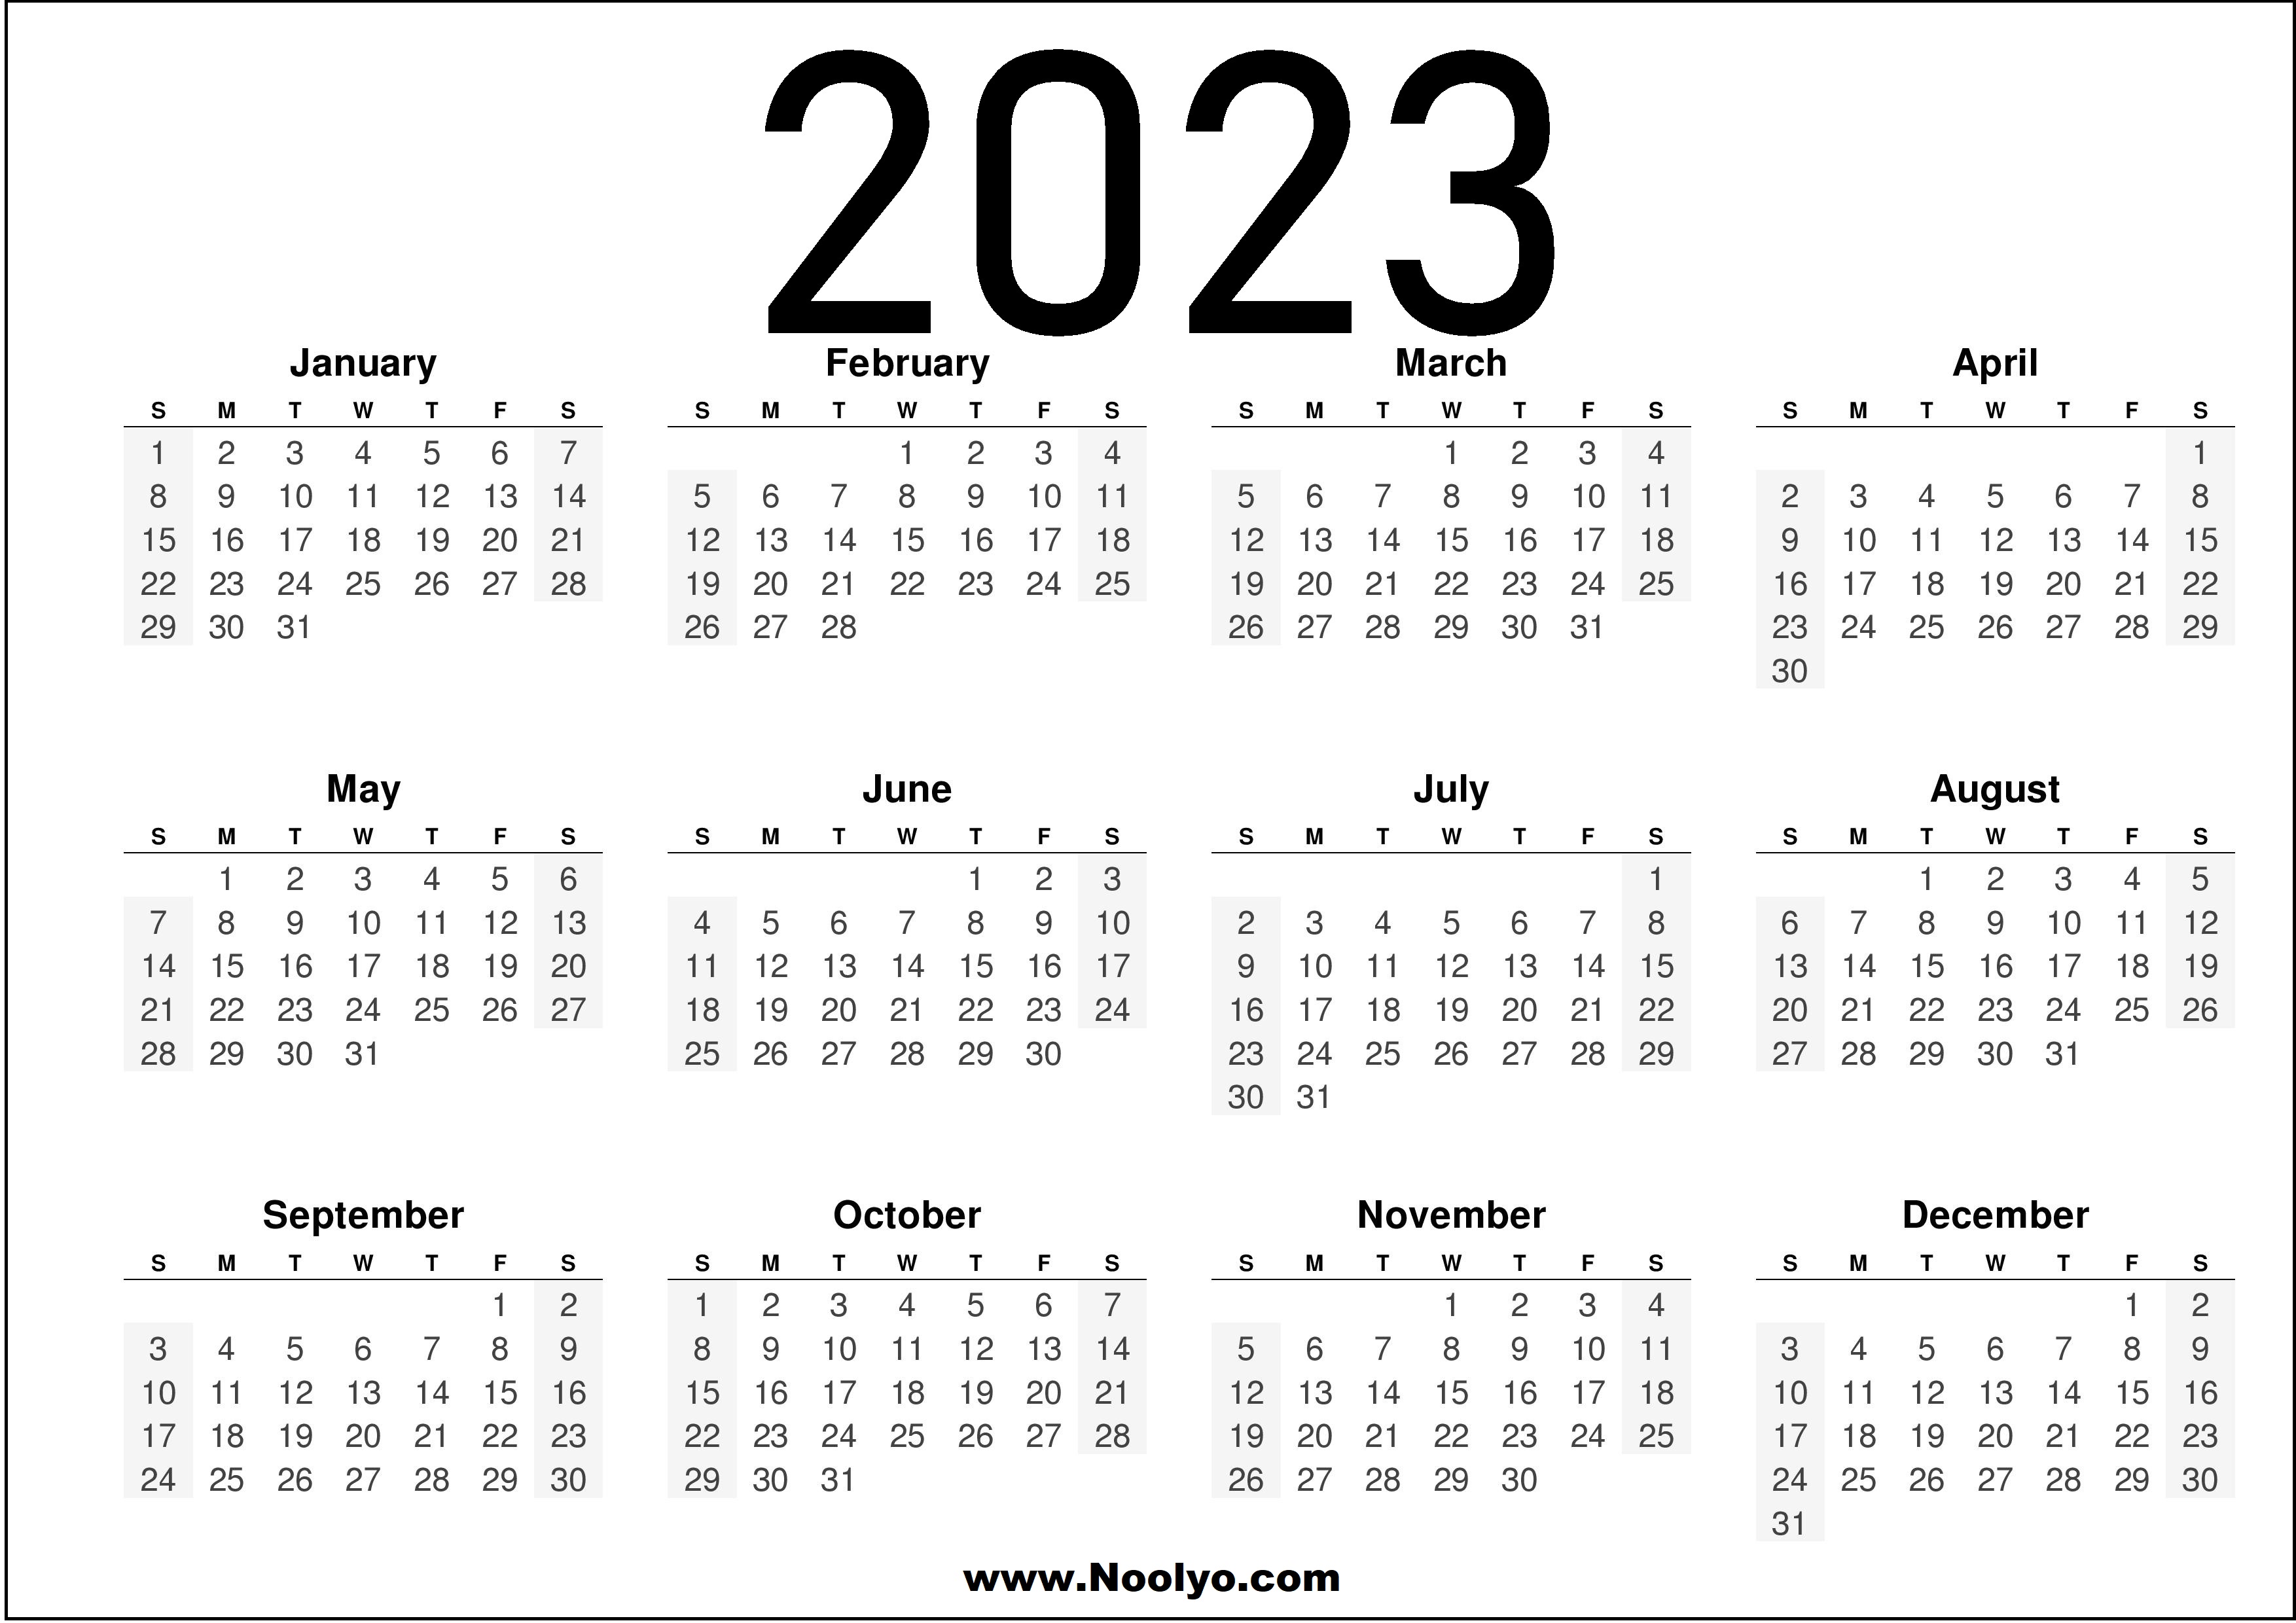 national day calendar 2023 printable with holidays